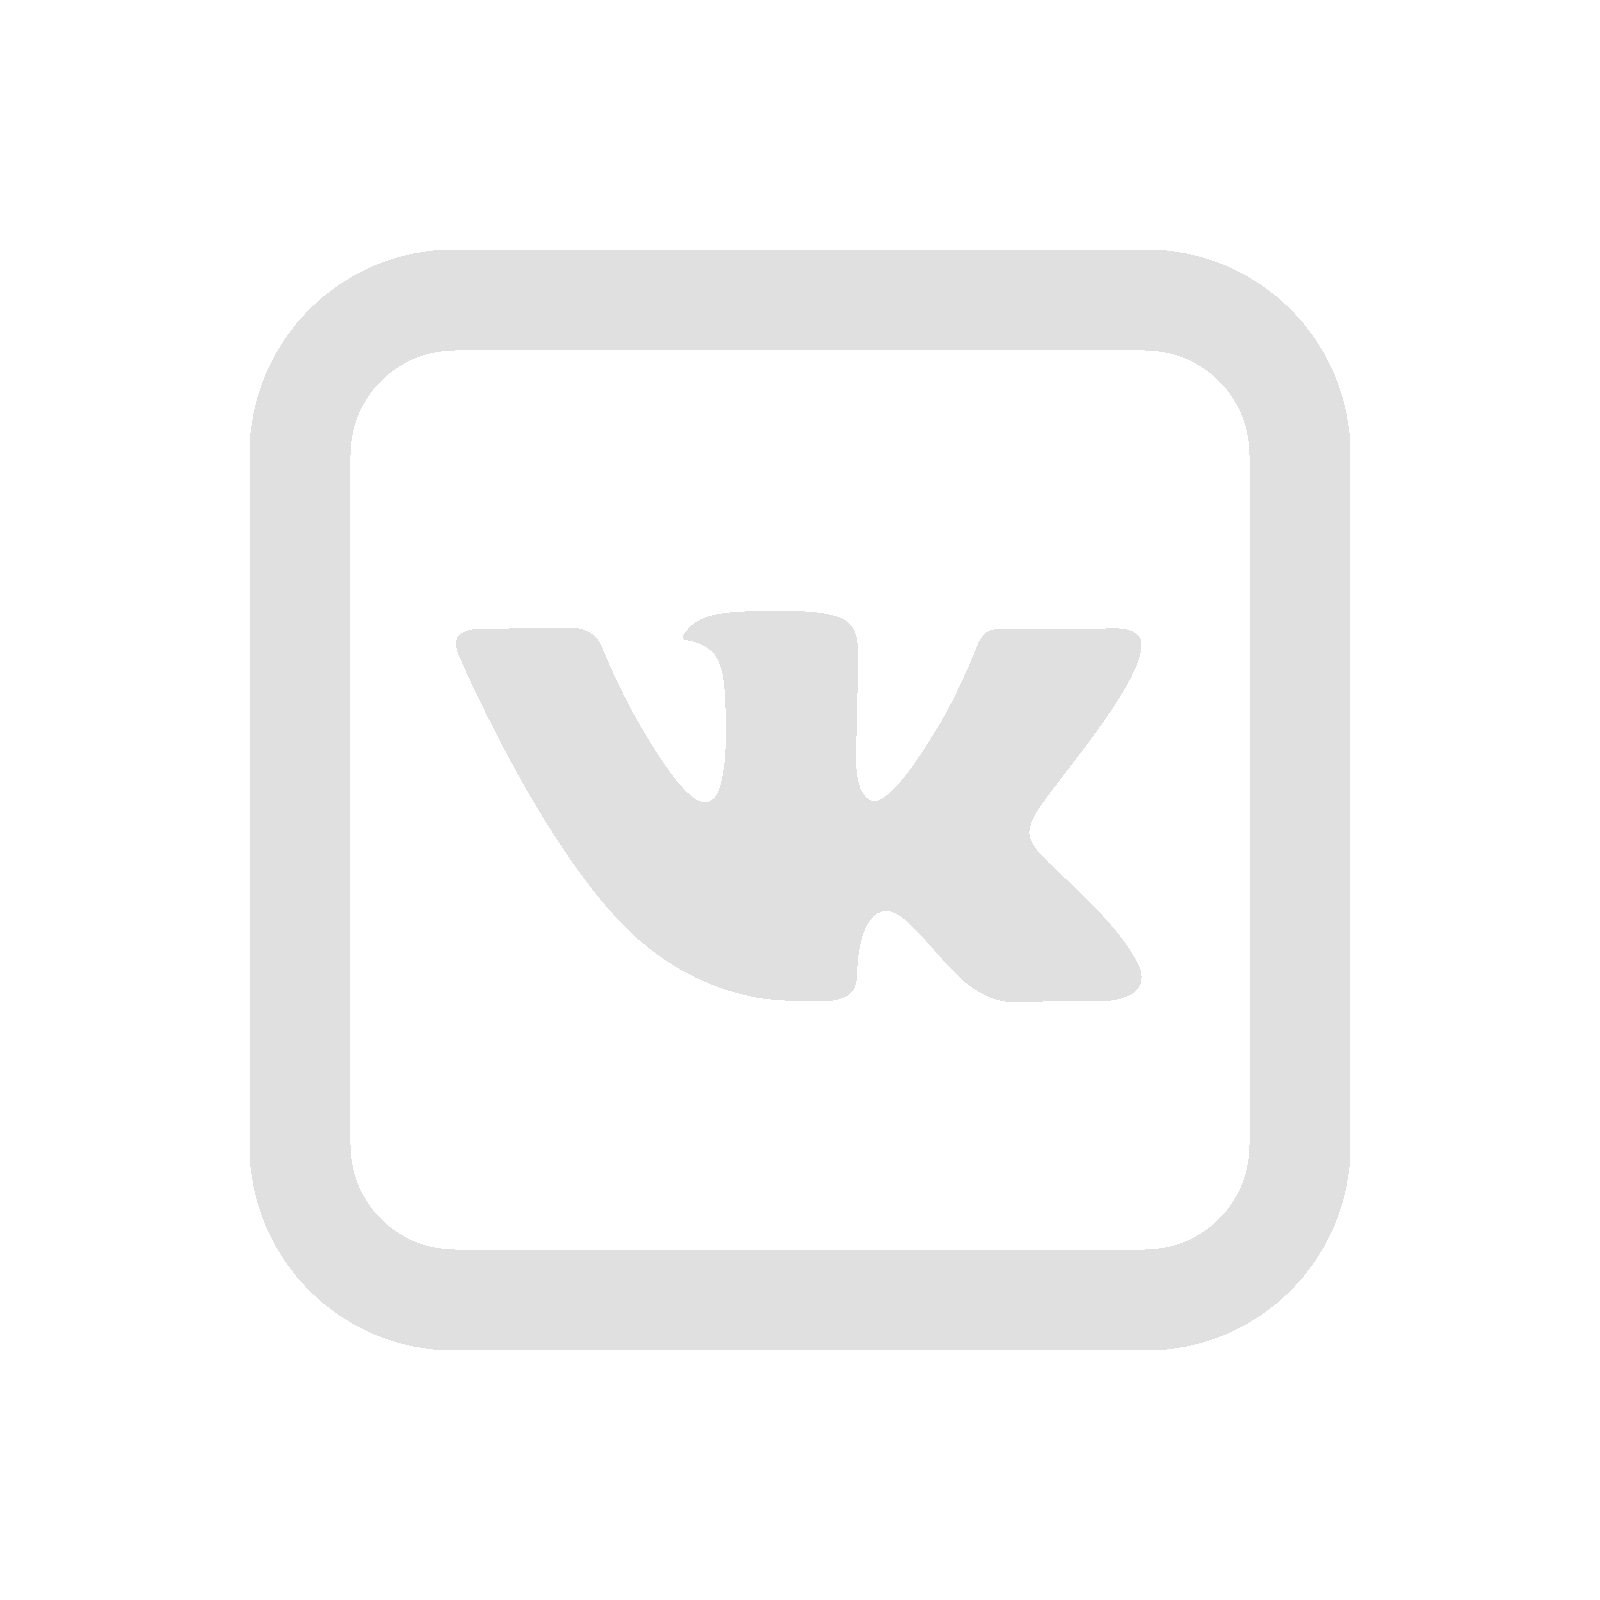 Логотип ВК. Значок ВК белый. Прозрачный значок ВК. Значок мл. Vk com oge100ballov